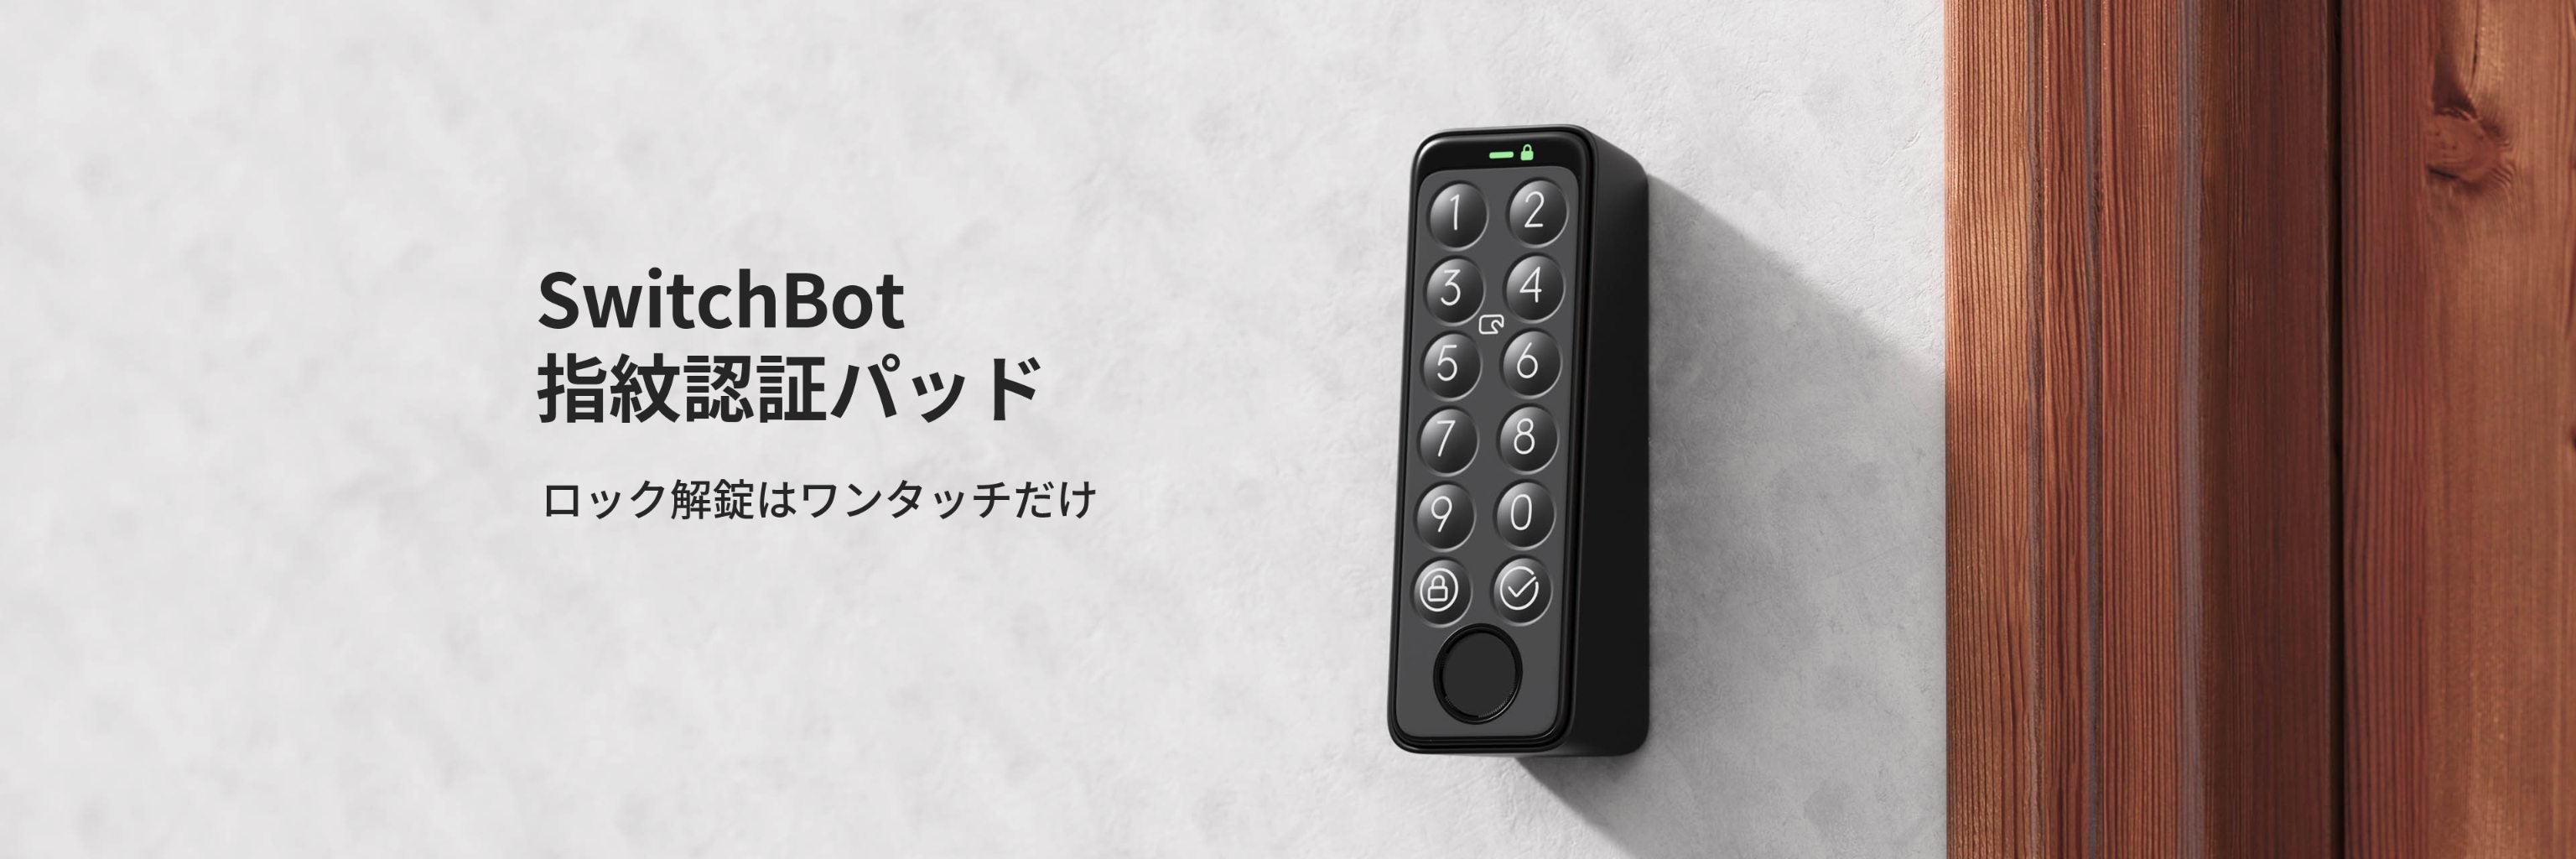 SwitchBot 指紋認証パット キーレス生活を実現するスマートキー